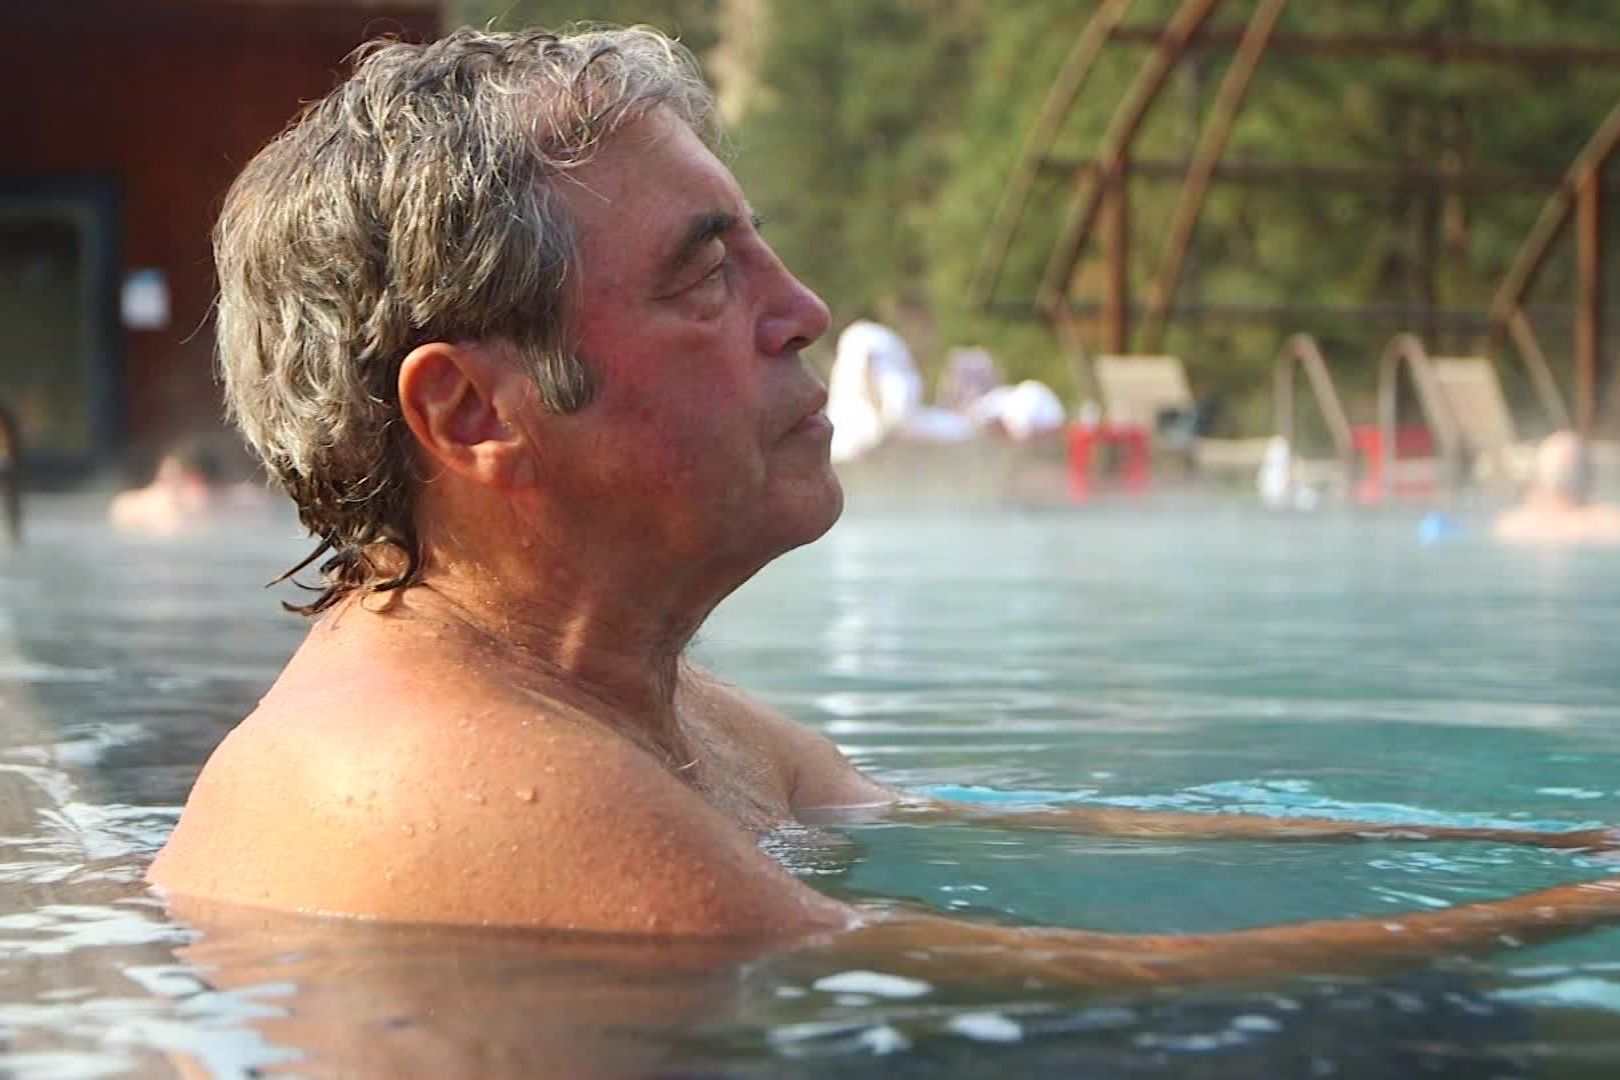 Hot baths, saunas can relieve pain, help heart | CNN